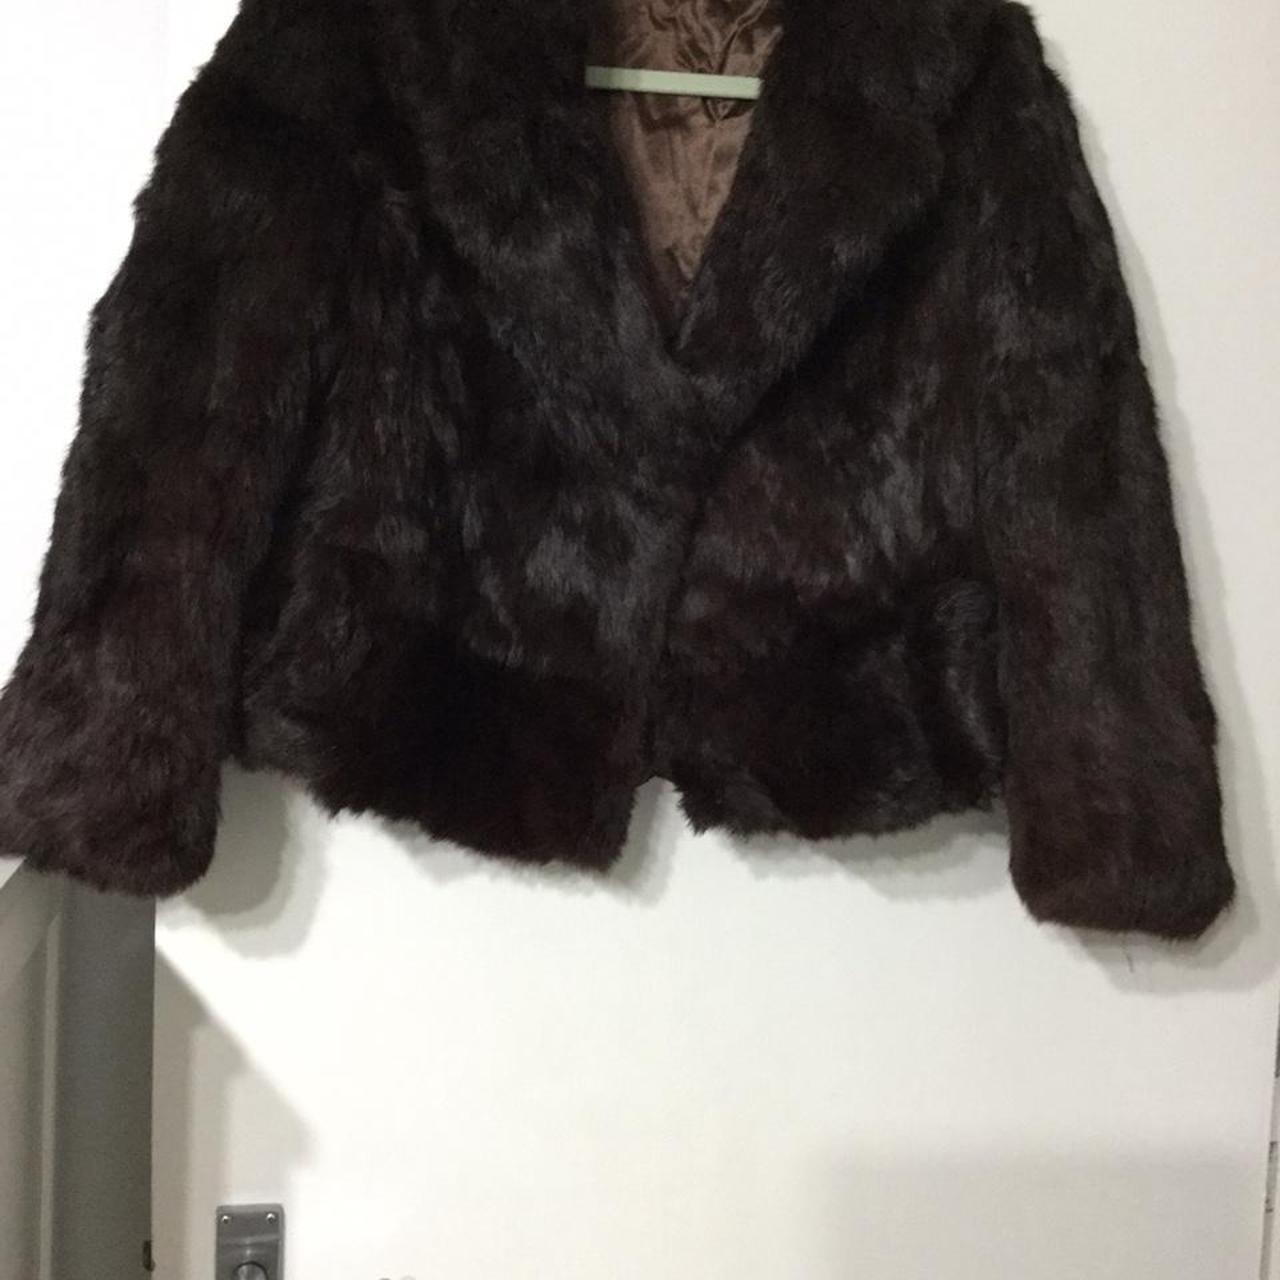 New Fur Jacket, dark brown in colour, very warm, two... - Depop